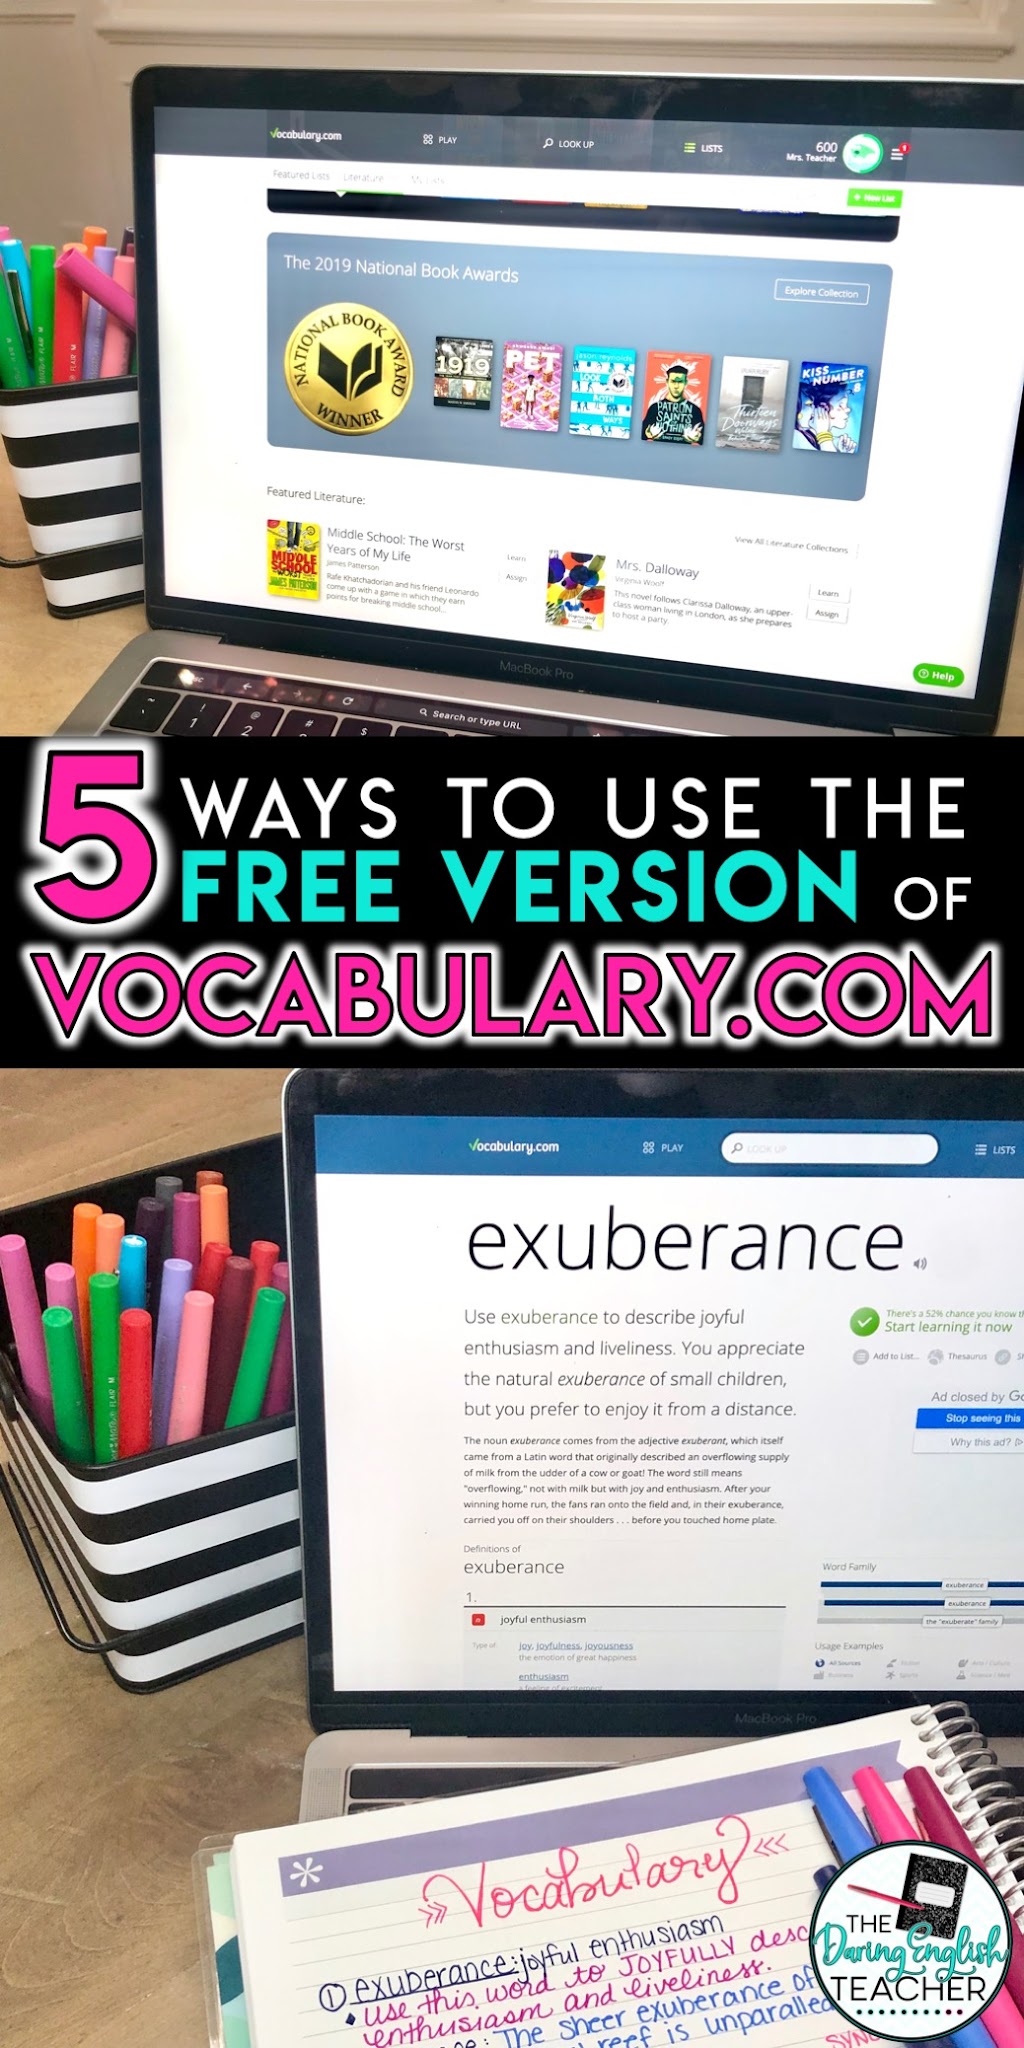 5 Ways to Use the Free Version of Vocabulary.com